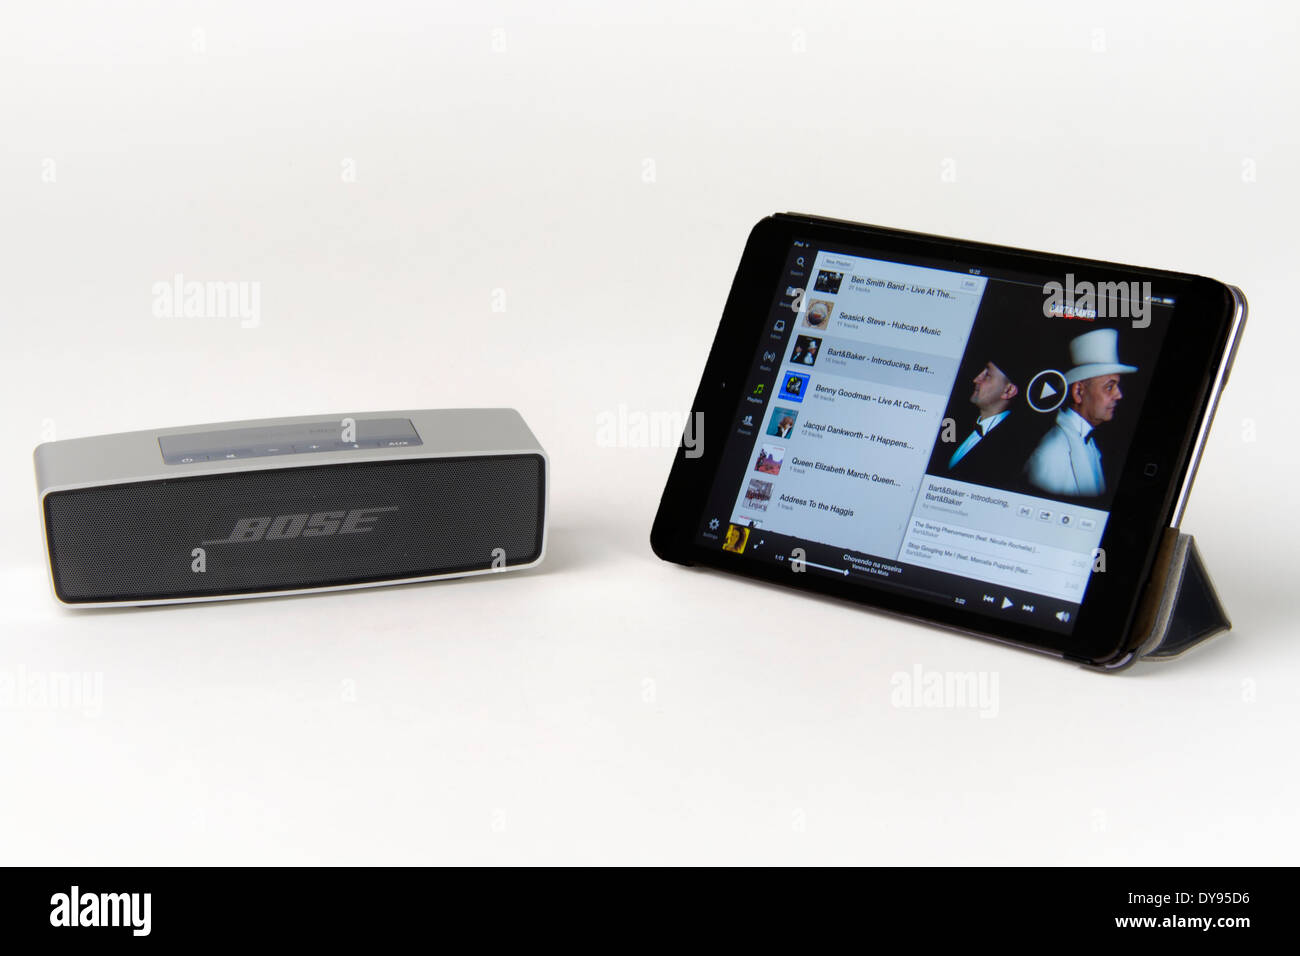 Apple iPad mini running a music app and a Bose portable bluetooth speaker  Stock Photo - Alamy